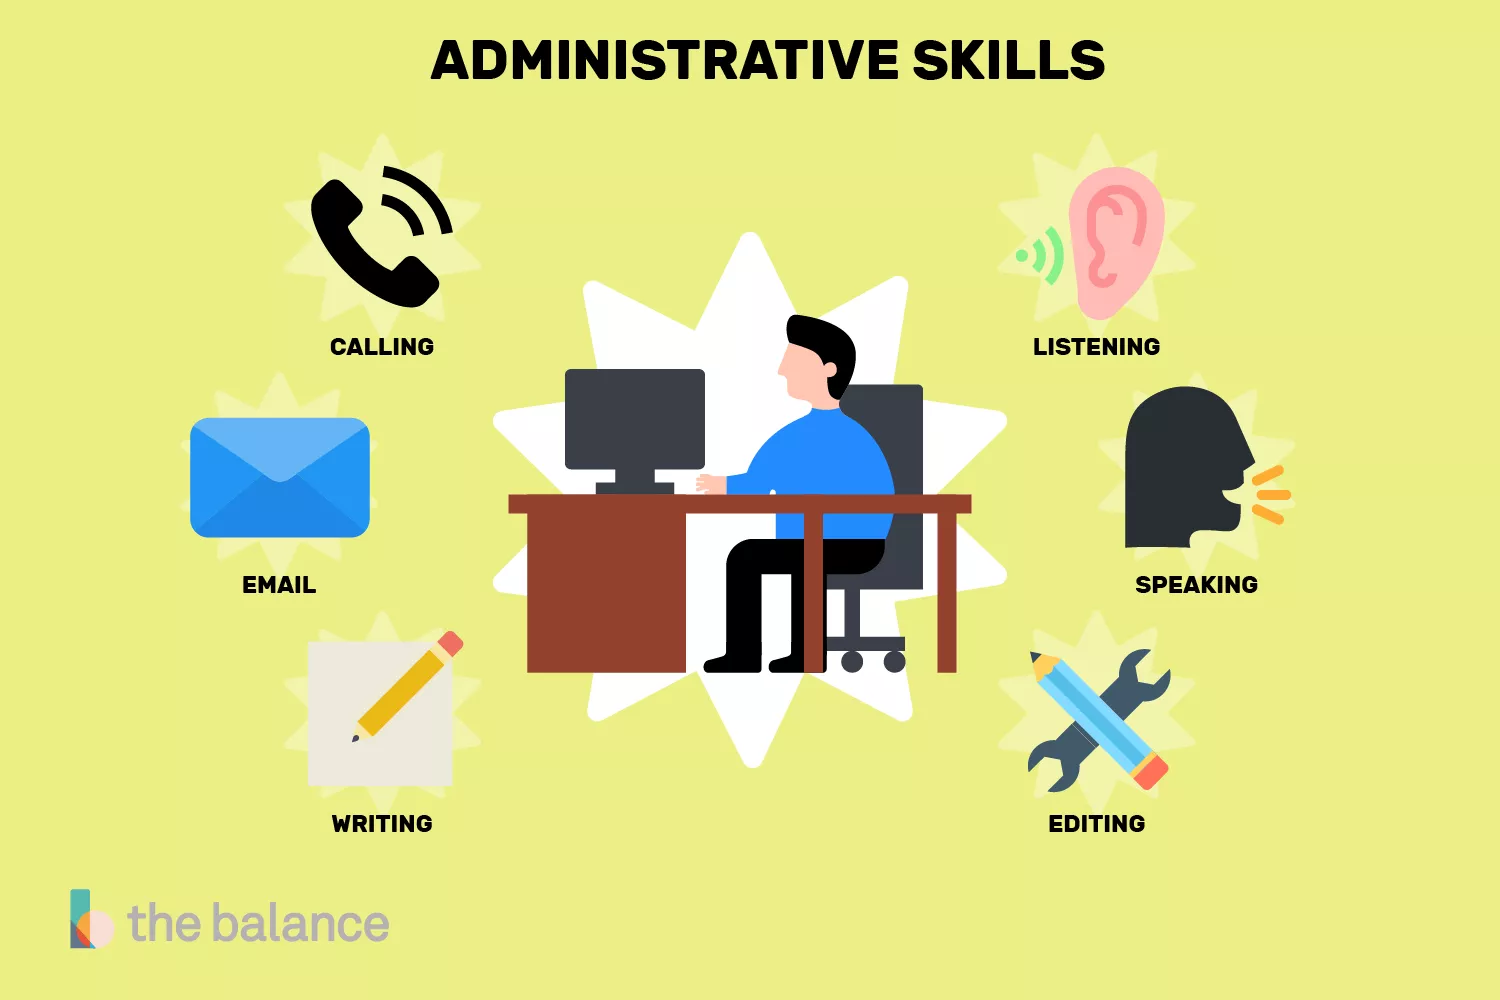 Habilidades administrativas importantes